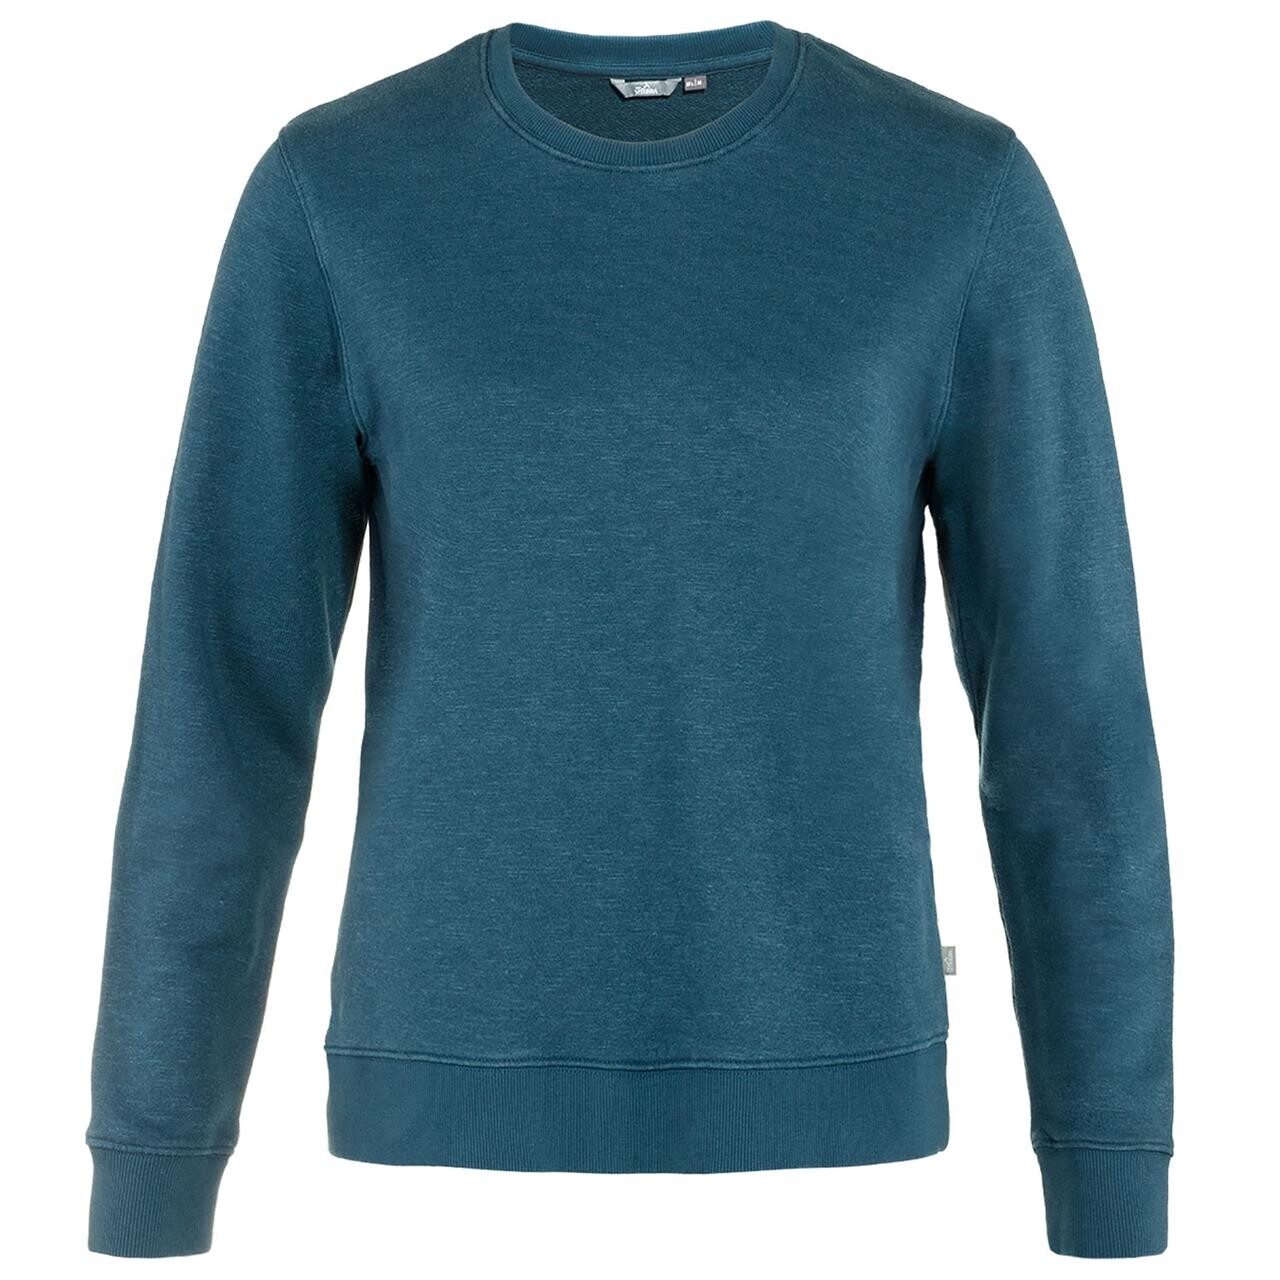 Se Tierra Womens Hempy Sweater (Blå (MAJOLICA BLUE) Medium) hos Friluftsland.dk